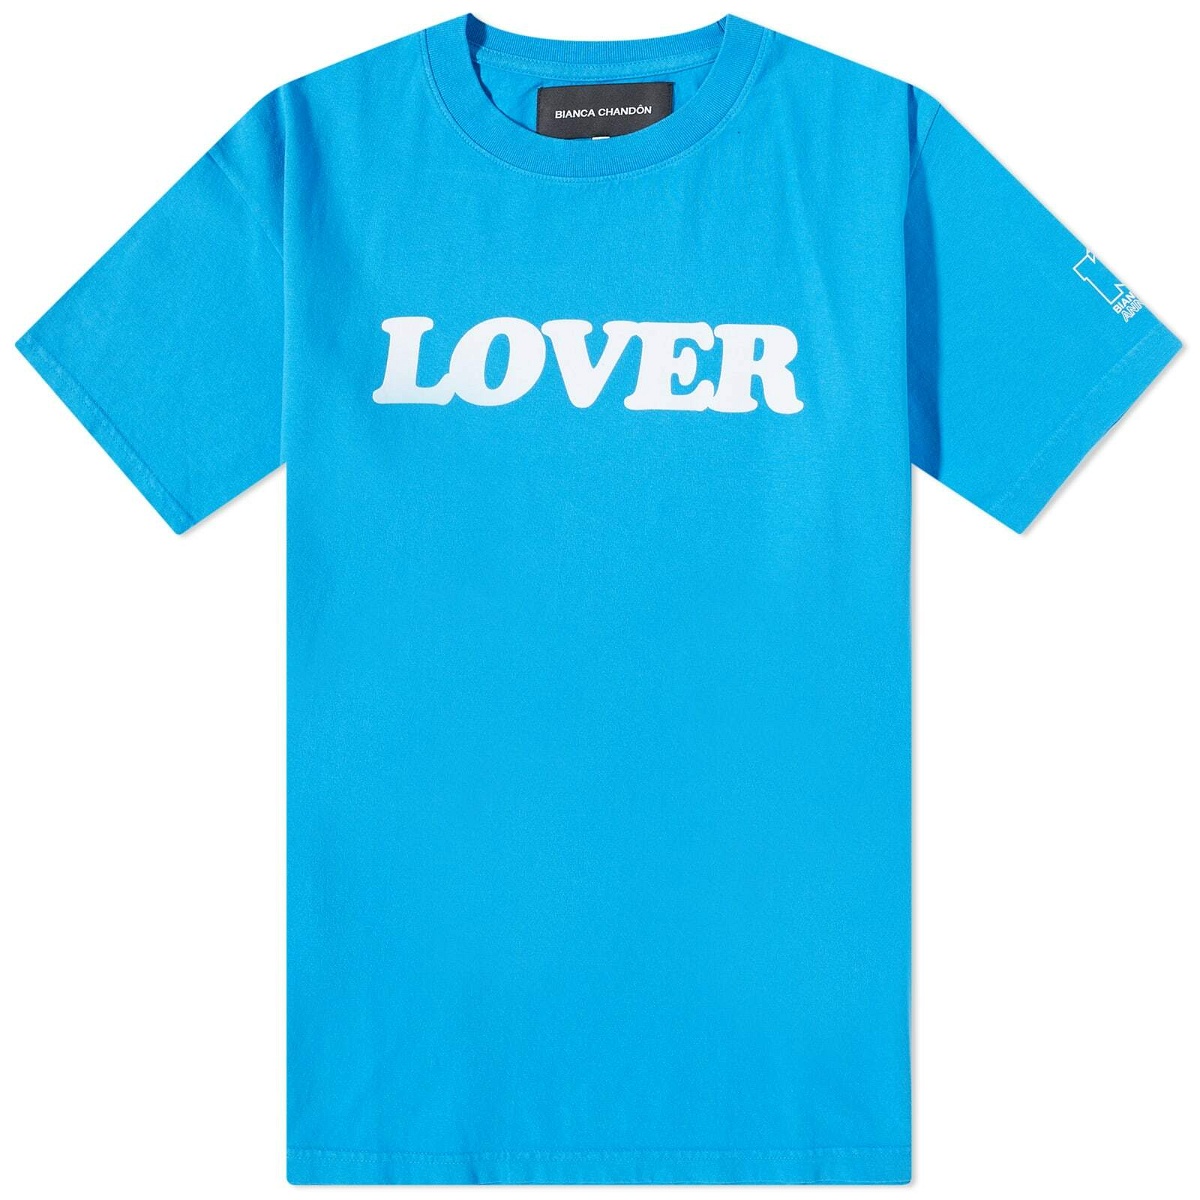 Bianca Chandon Men's 10th Anniversary Lover T-Shirt in Blue Bianca Chandon